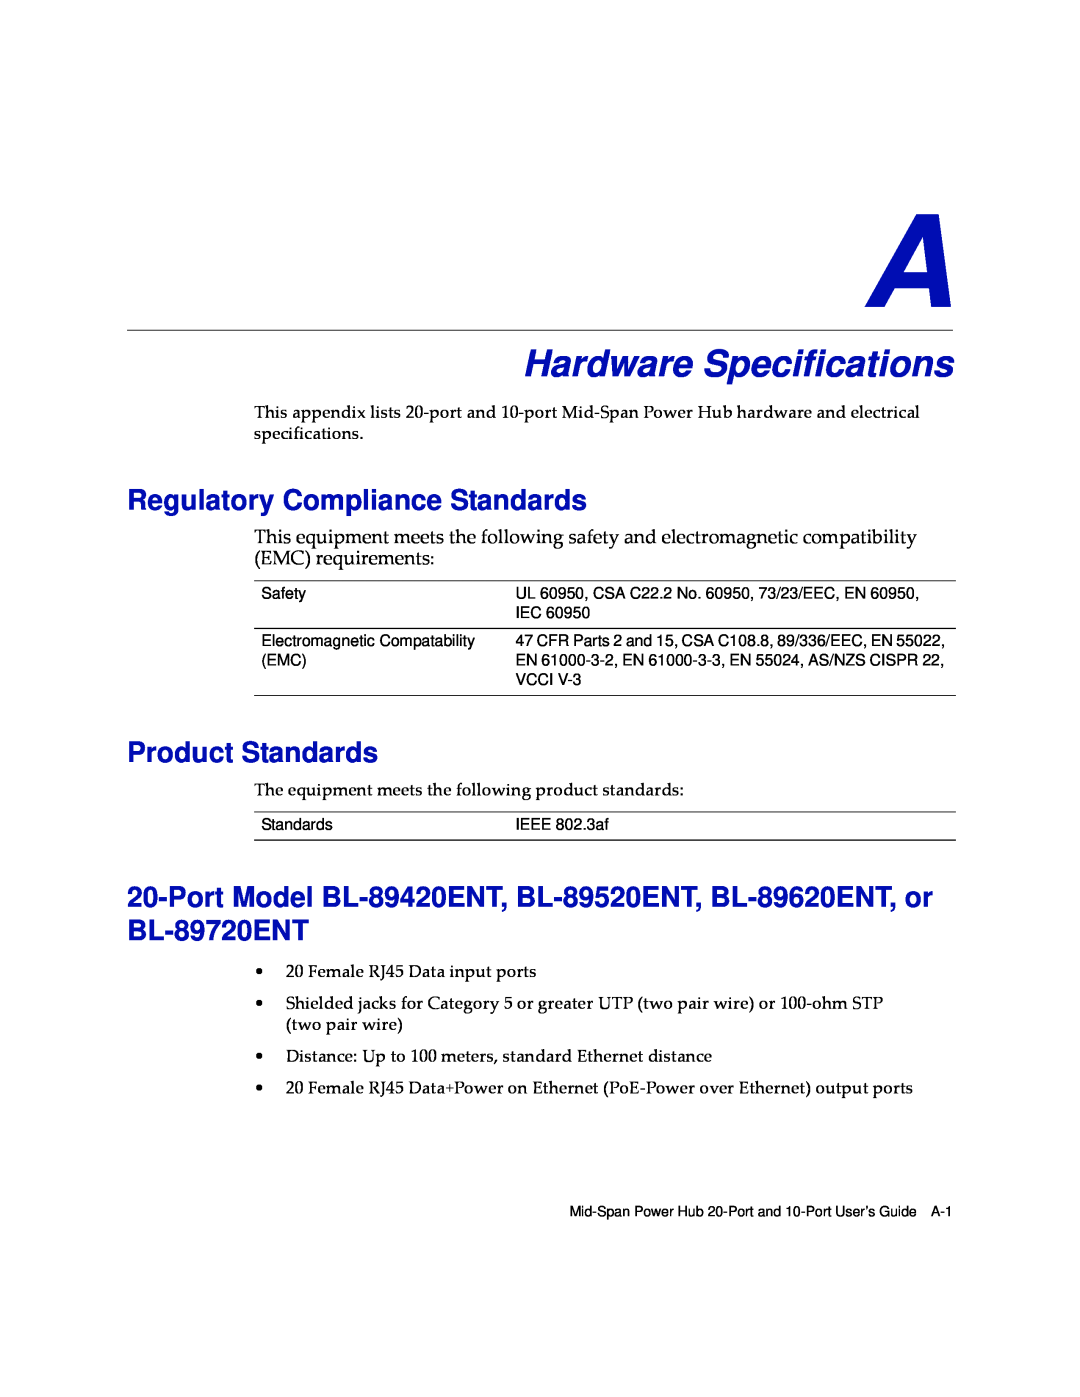 Enterasys Networks BL-89420ENT, BL-89720ENT Hardware Specifications, Regulatory Compliance Standards, Product Standards 